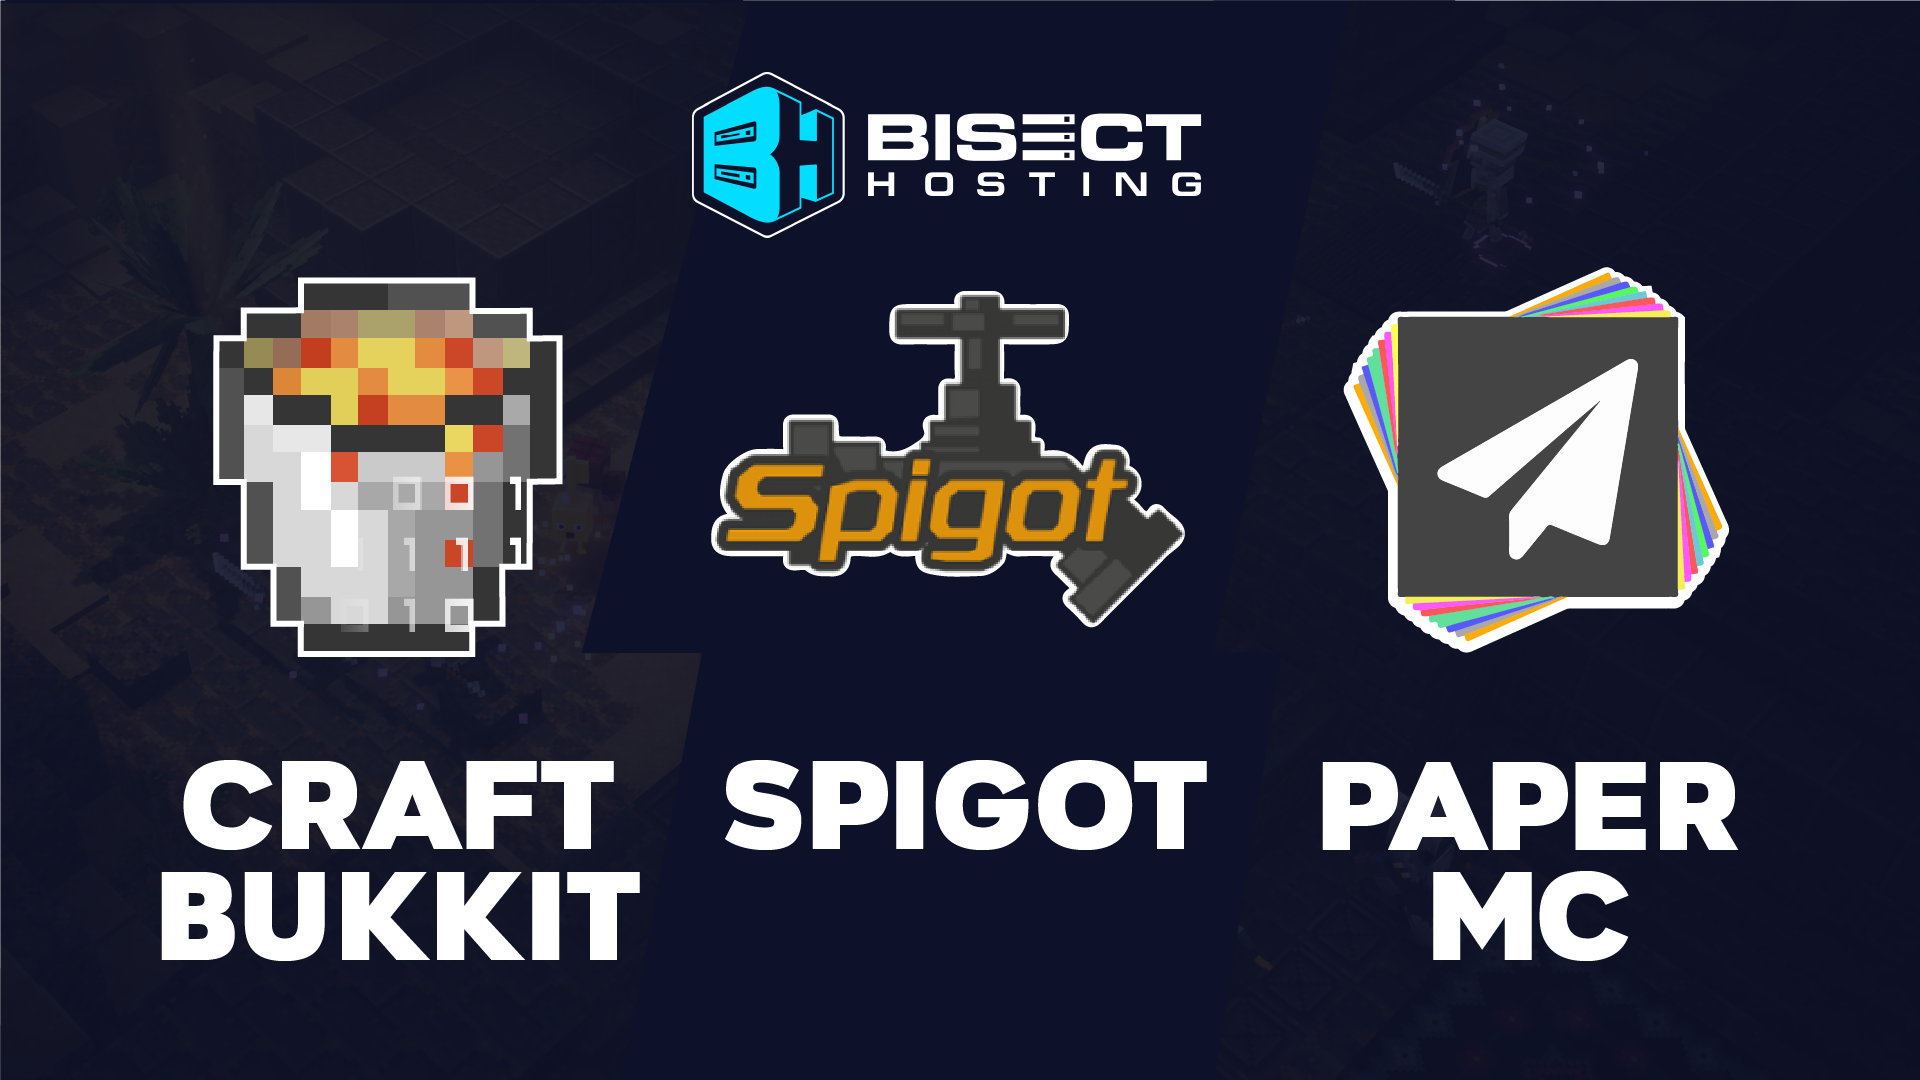 CraftBukkit vs Spigot vs Paper